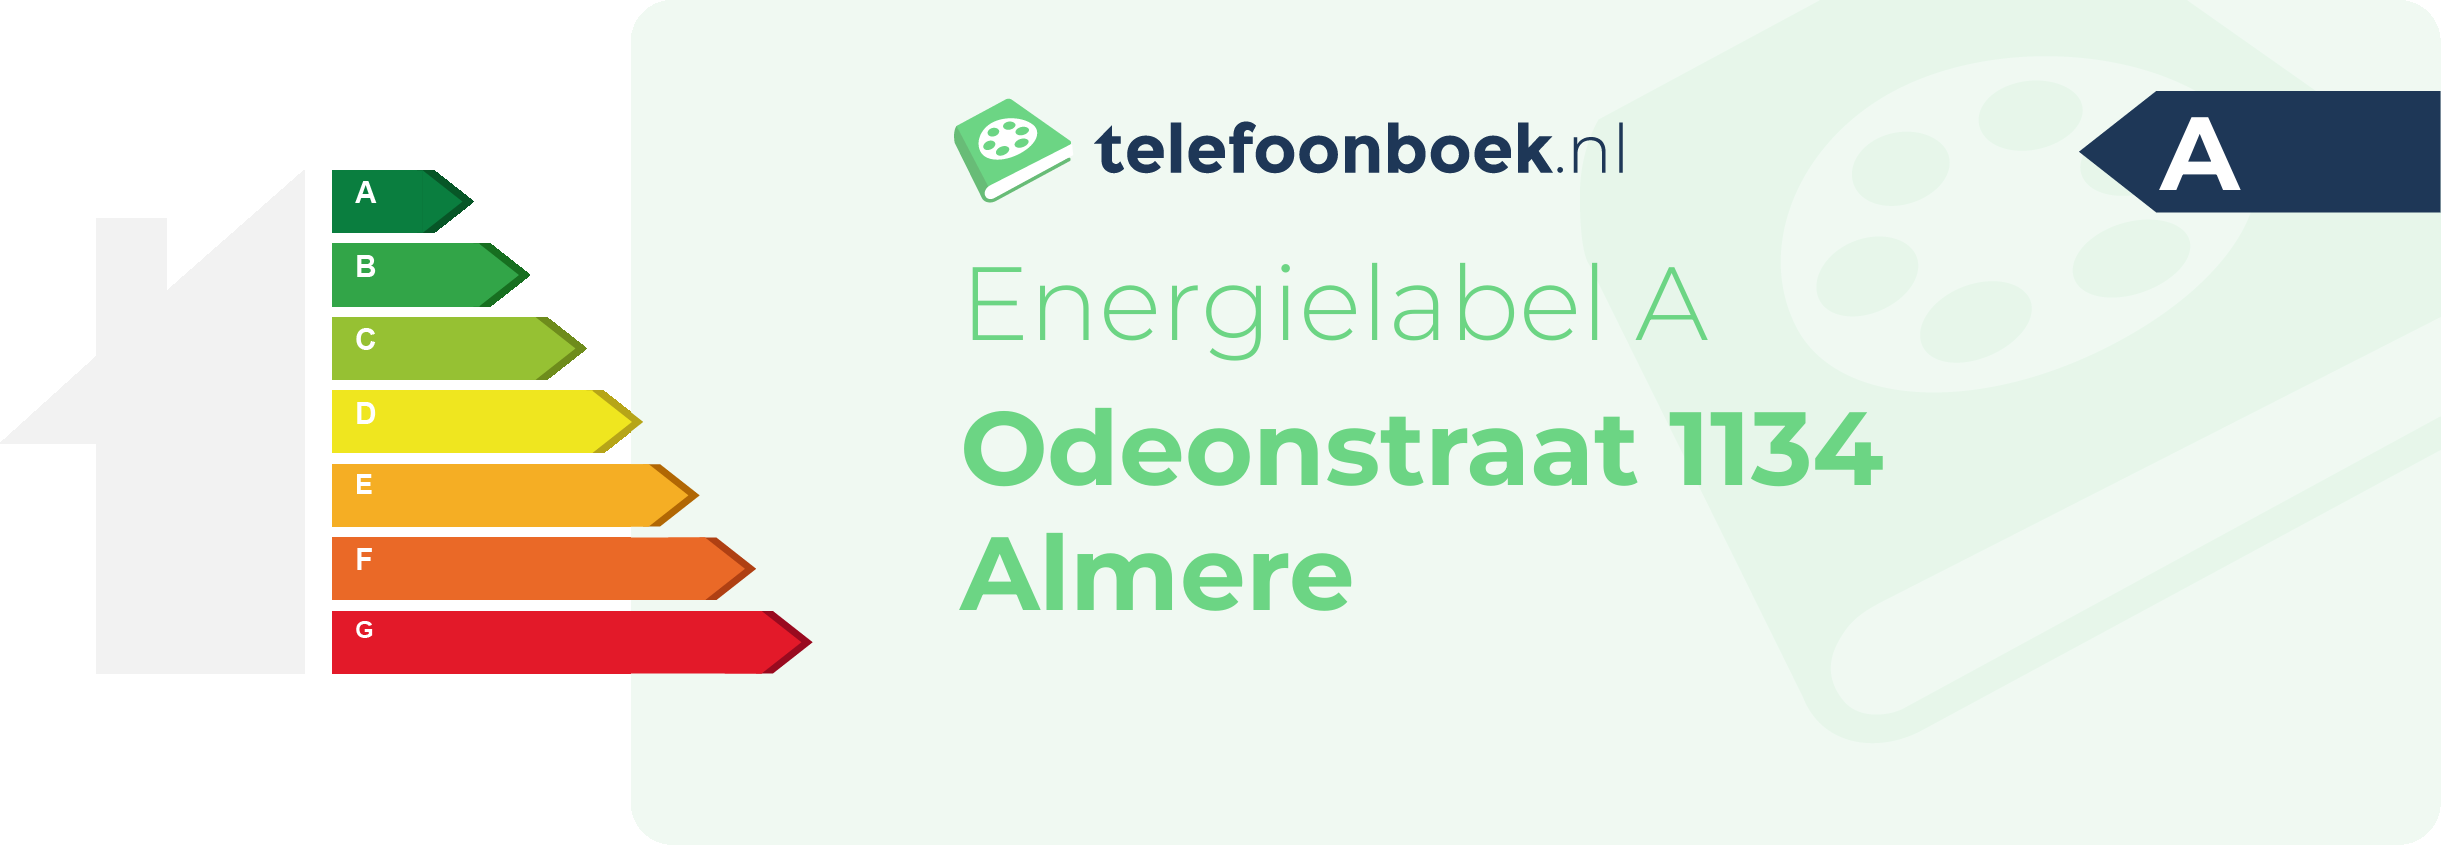 Energielabel Odeonstraat 1134 Almere